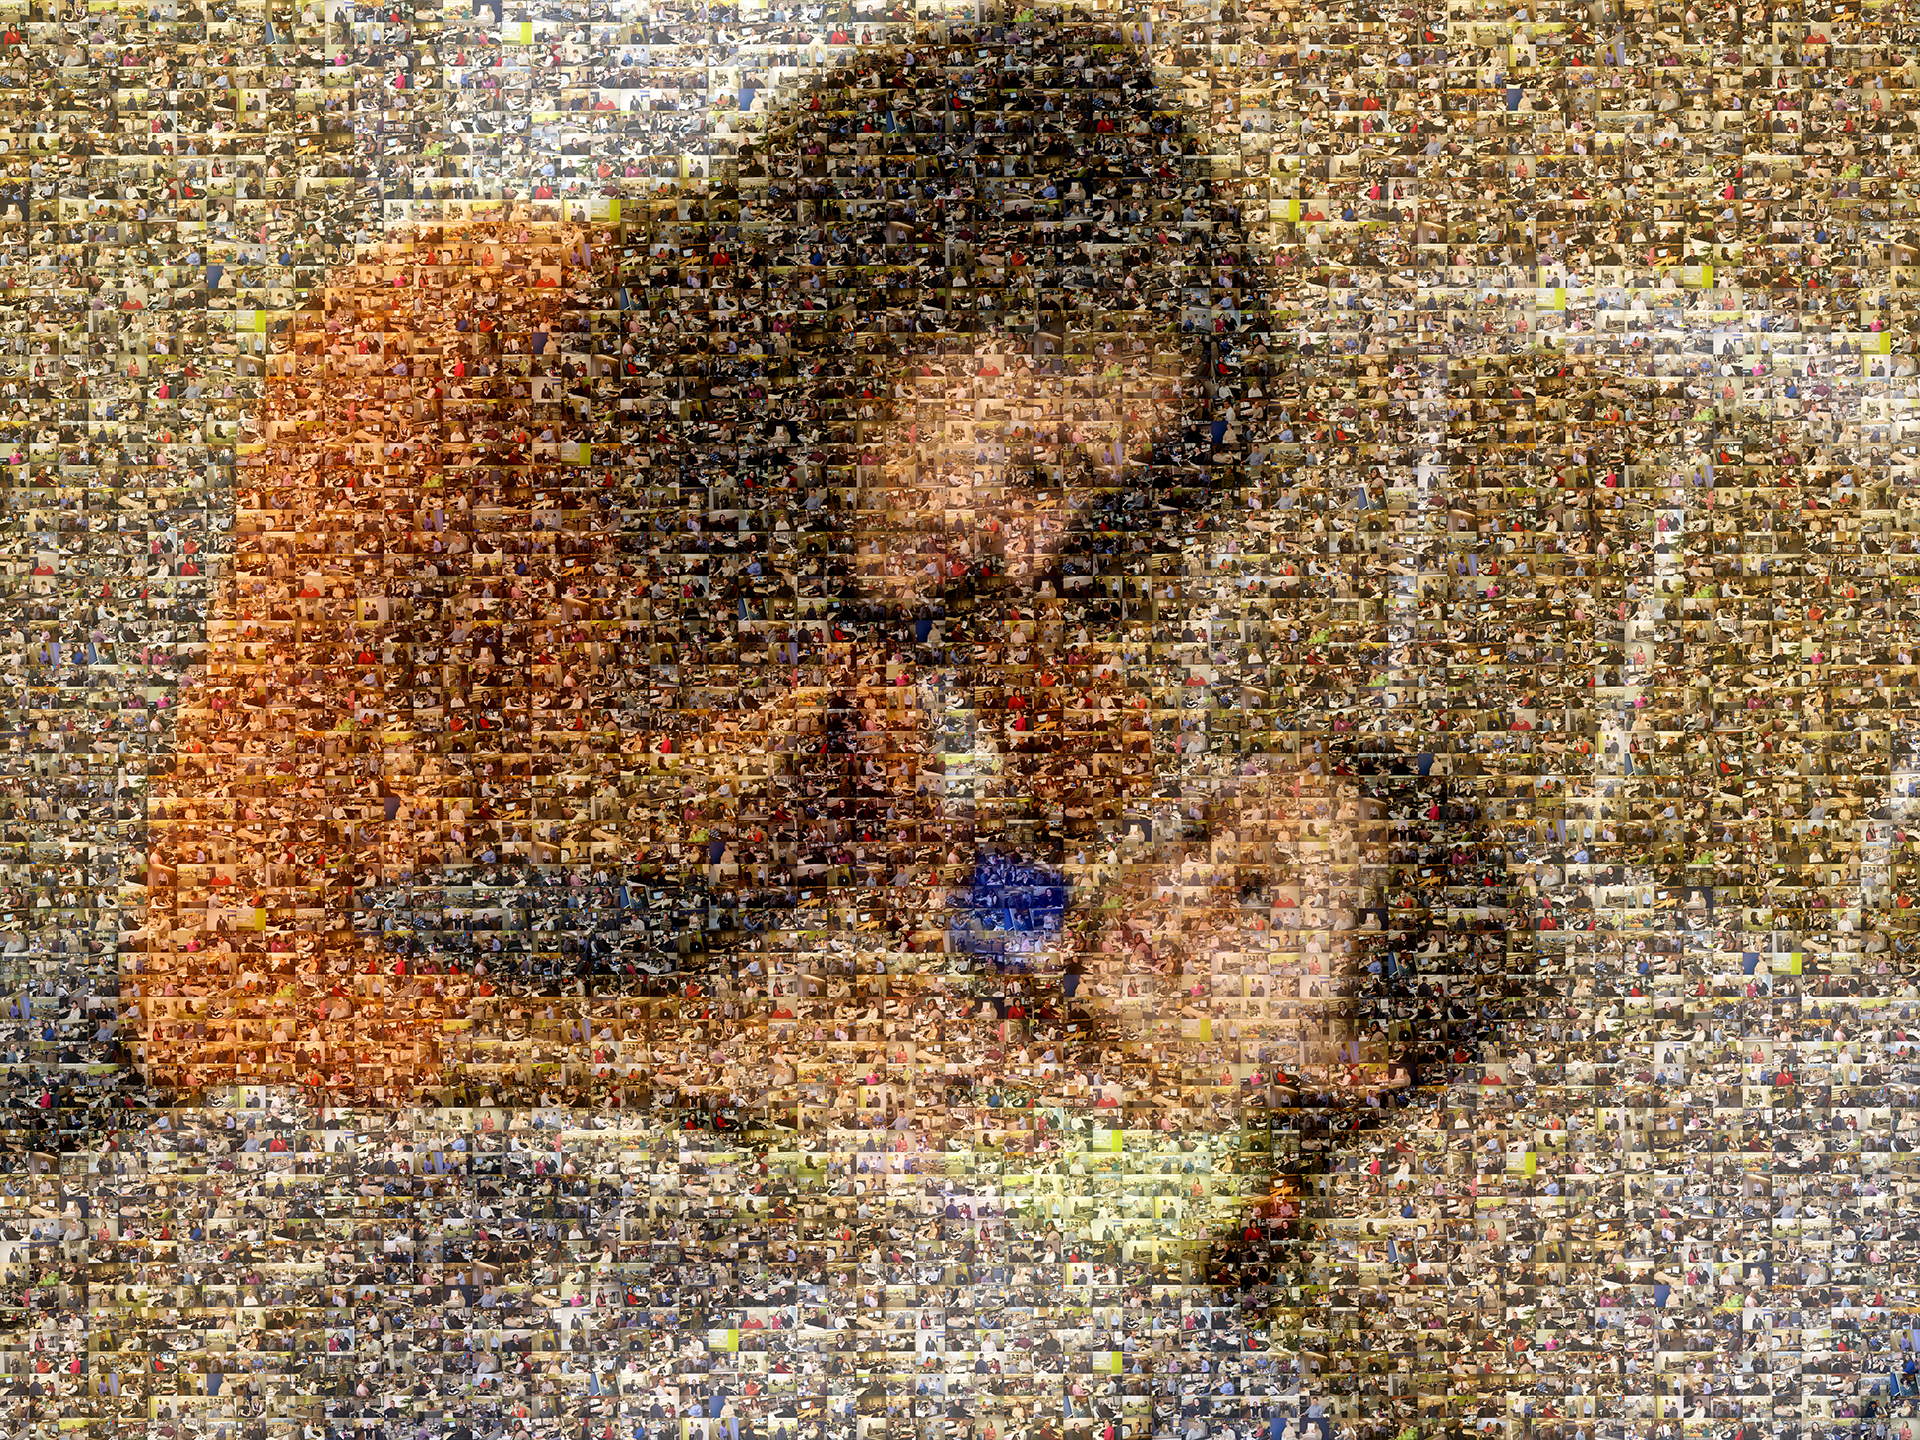 photo mosaic created using 268 employee photos